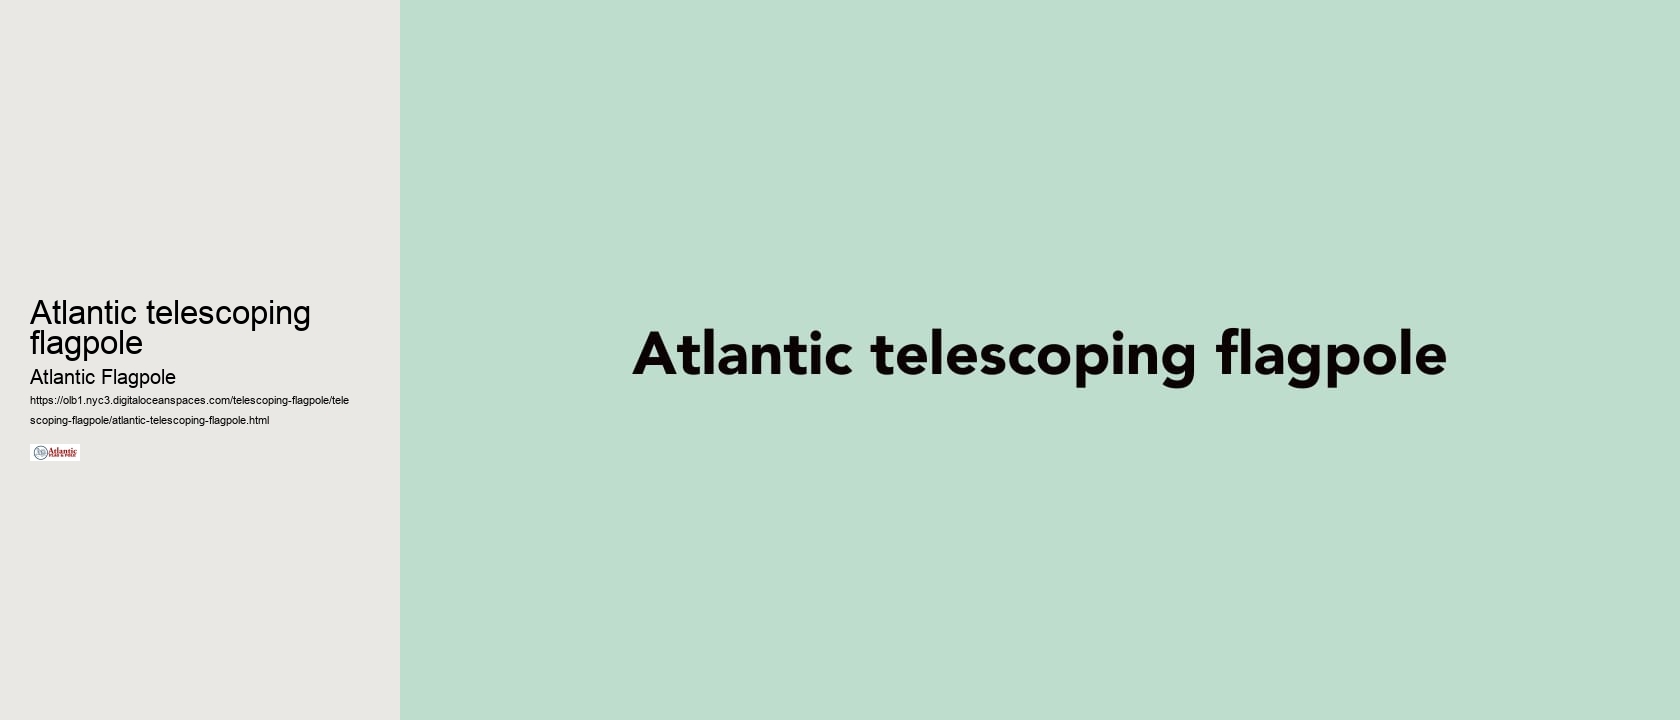 Atlantic telescoping flagpole